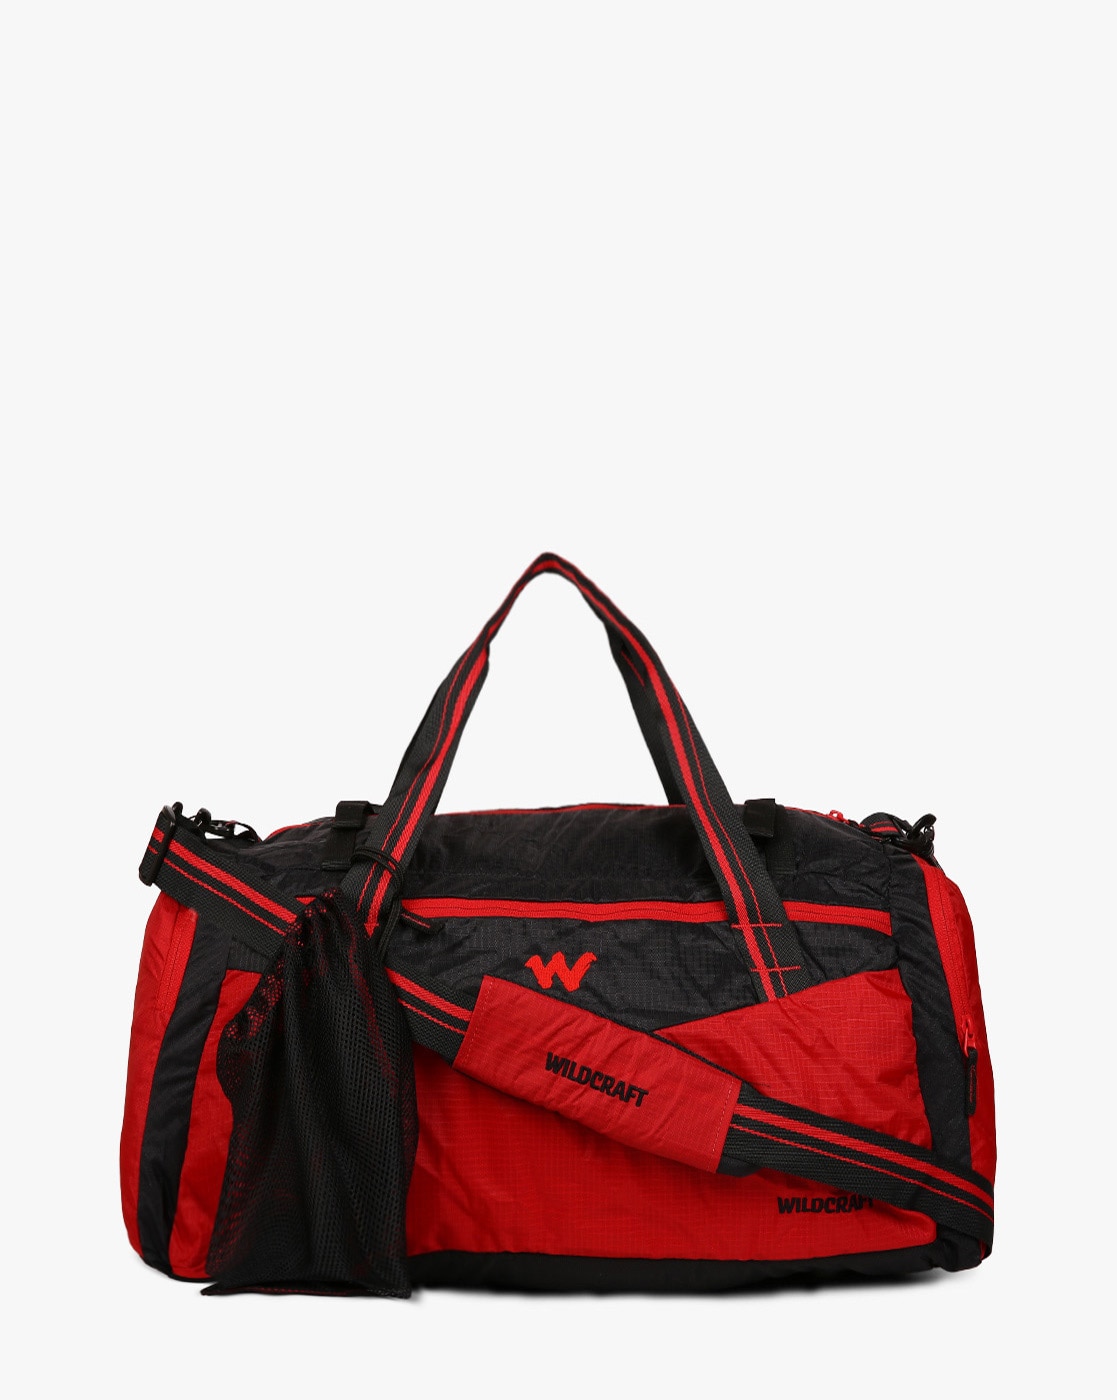 Wildcraft Unisex Duffel Bag Duffel Without Wheels Red - Price in India |  Flipkart.com